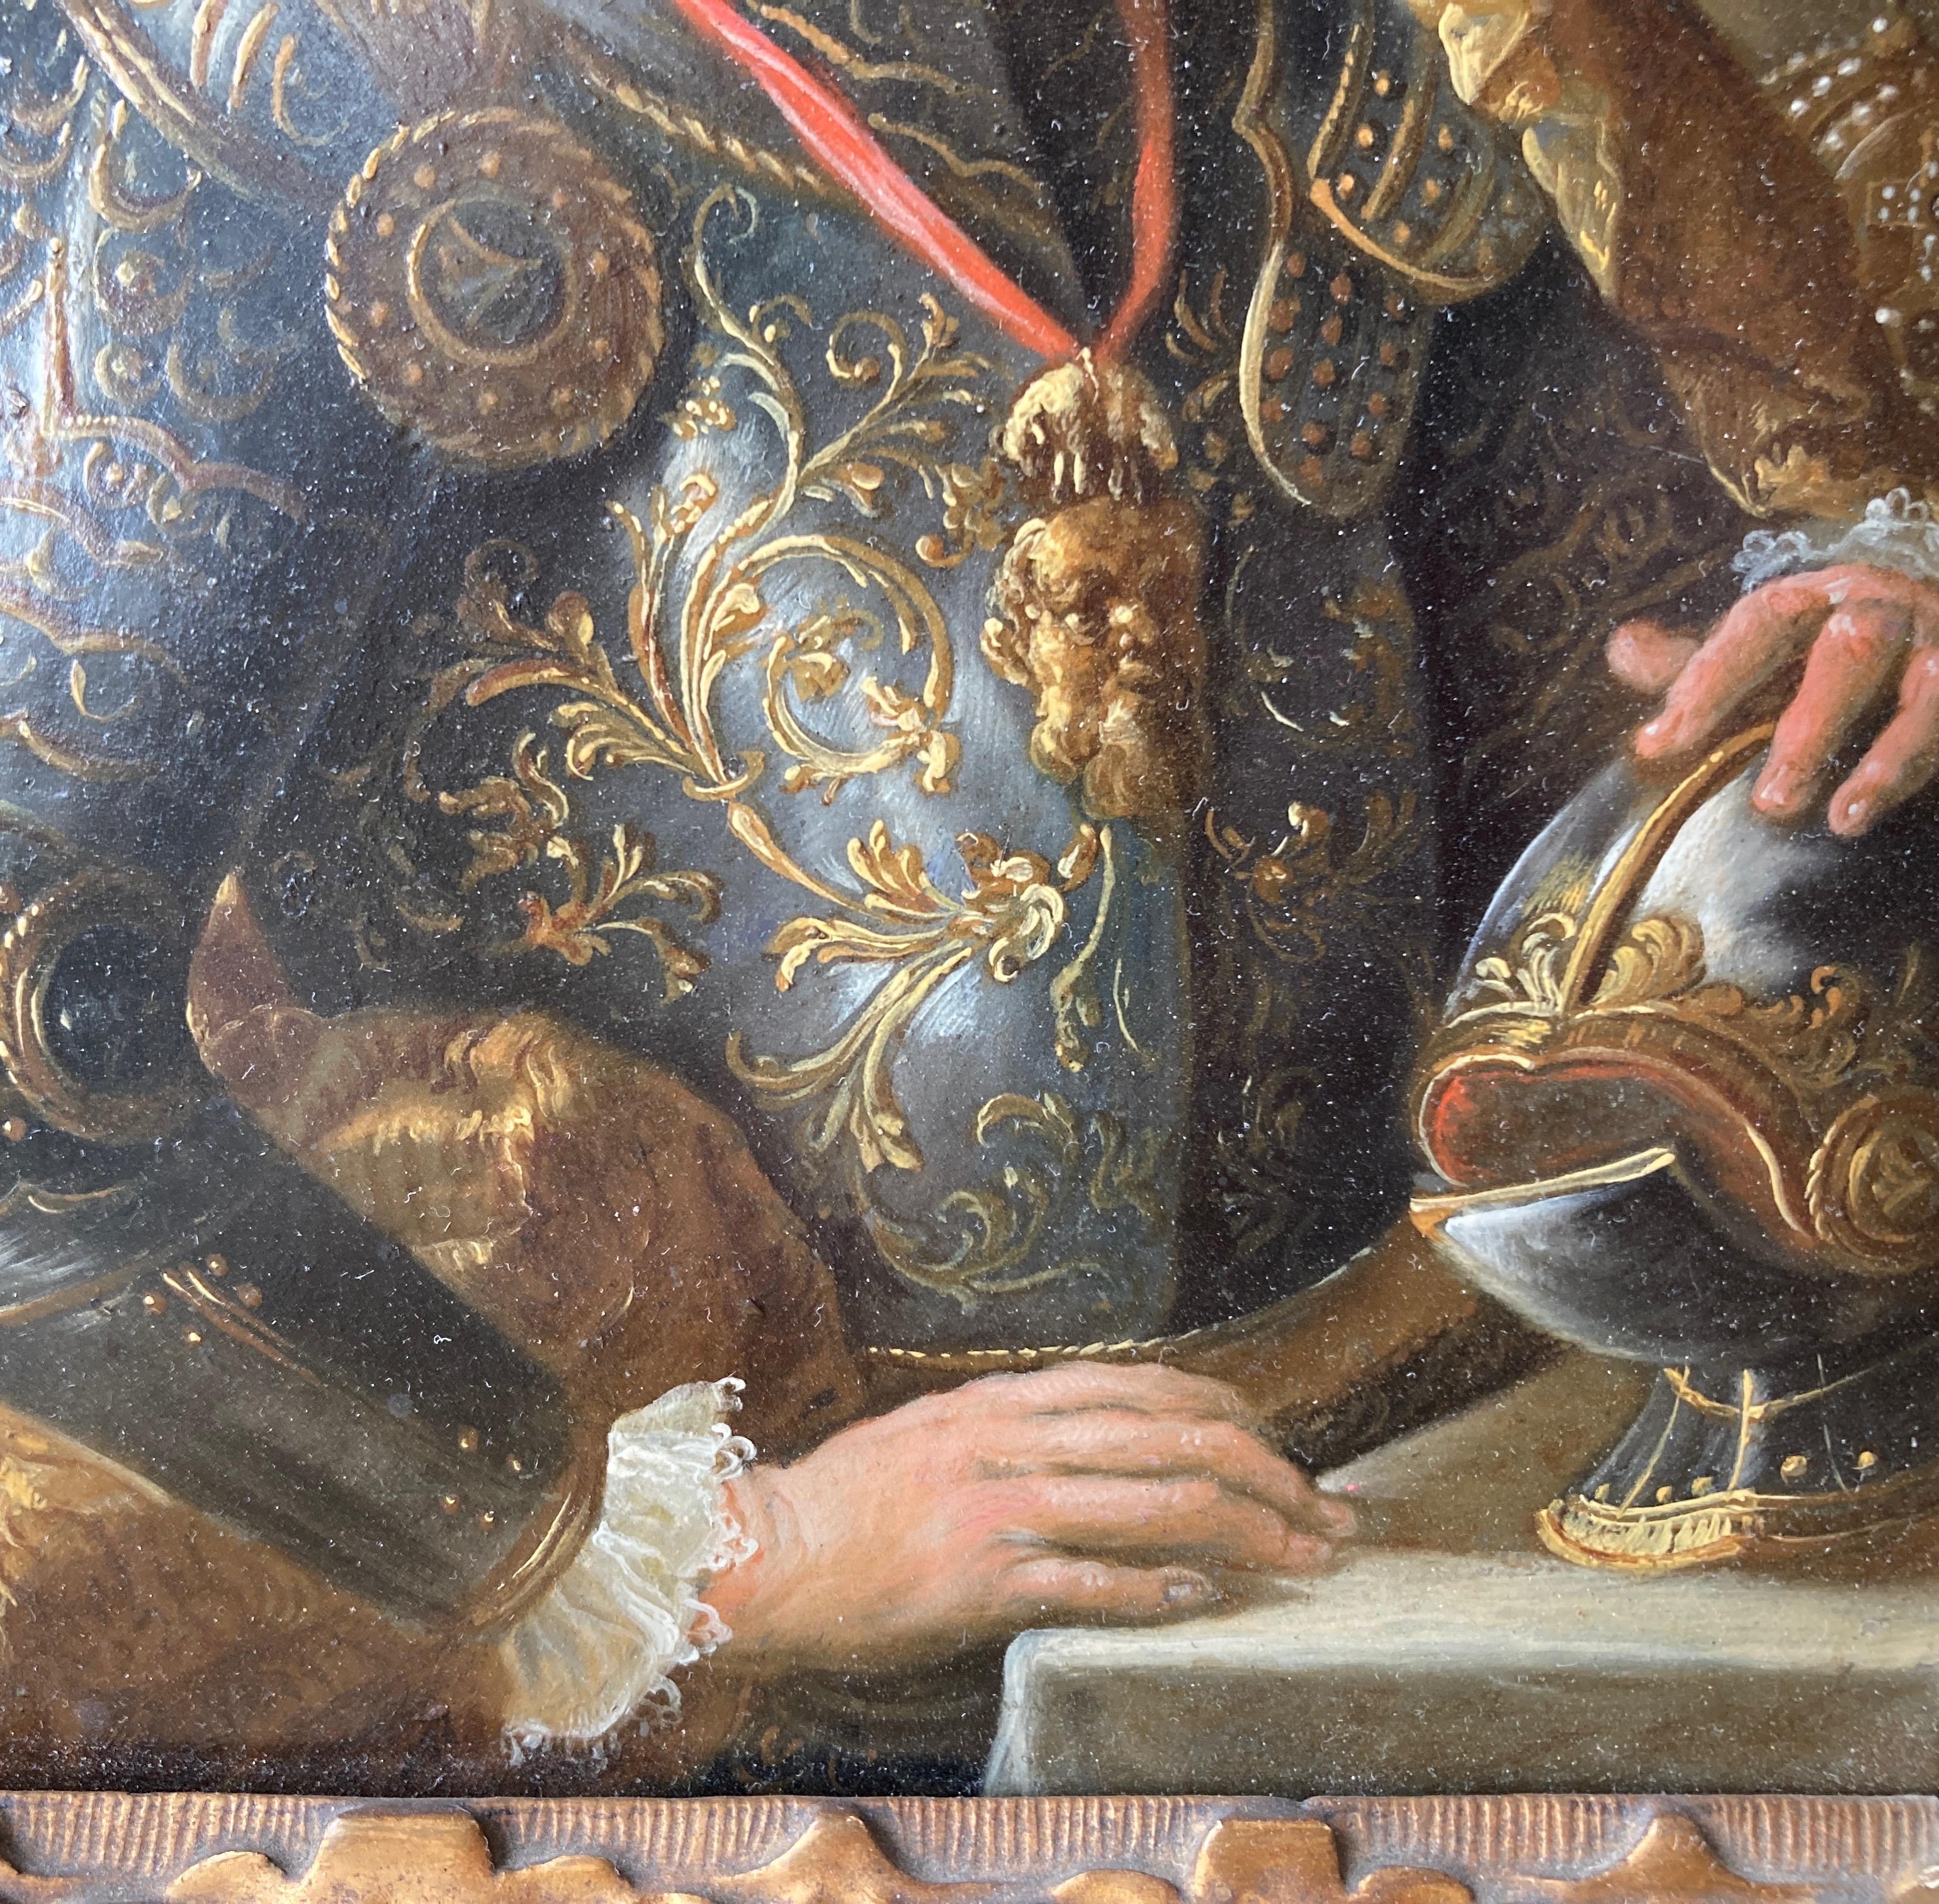 Unknown artist
Prague School
Portrait of Emperor Ferdinand I. (1503-1564)
16th century
Oil on copper, 21,3 x 16,8 cm
Provenance:
Private collection, Pennsylvania, until 2016
This work by an unknown artist is a semi-portrait in predominantly